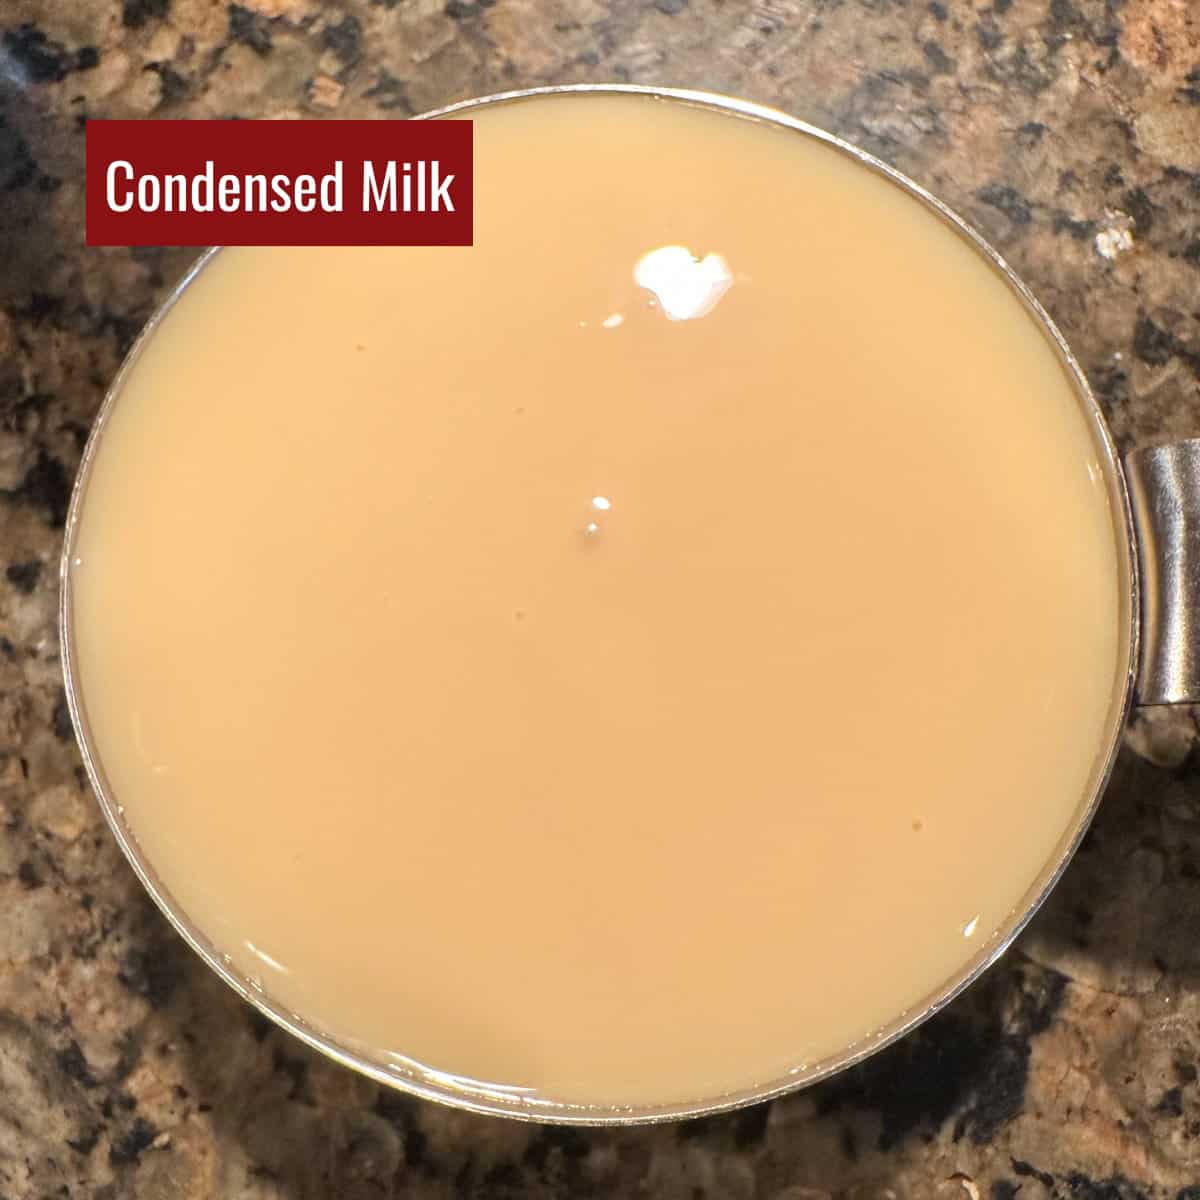 Condensed milk in a measuring cup.